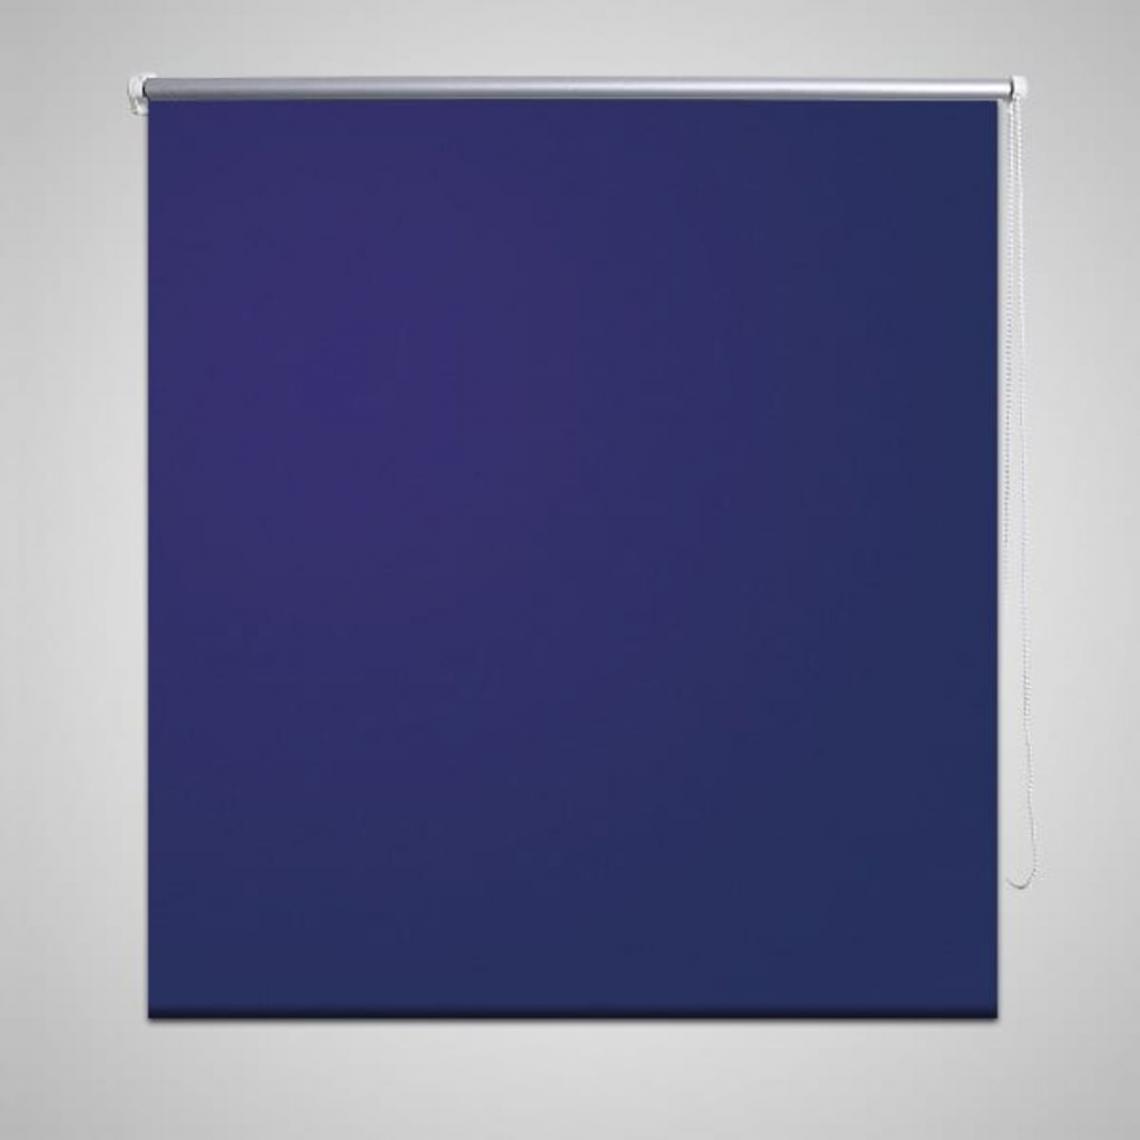 Chunhelife - Store enrouleur occultant 140 x 175 cm bleu - Store banne